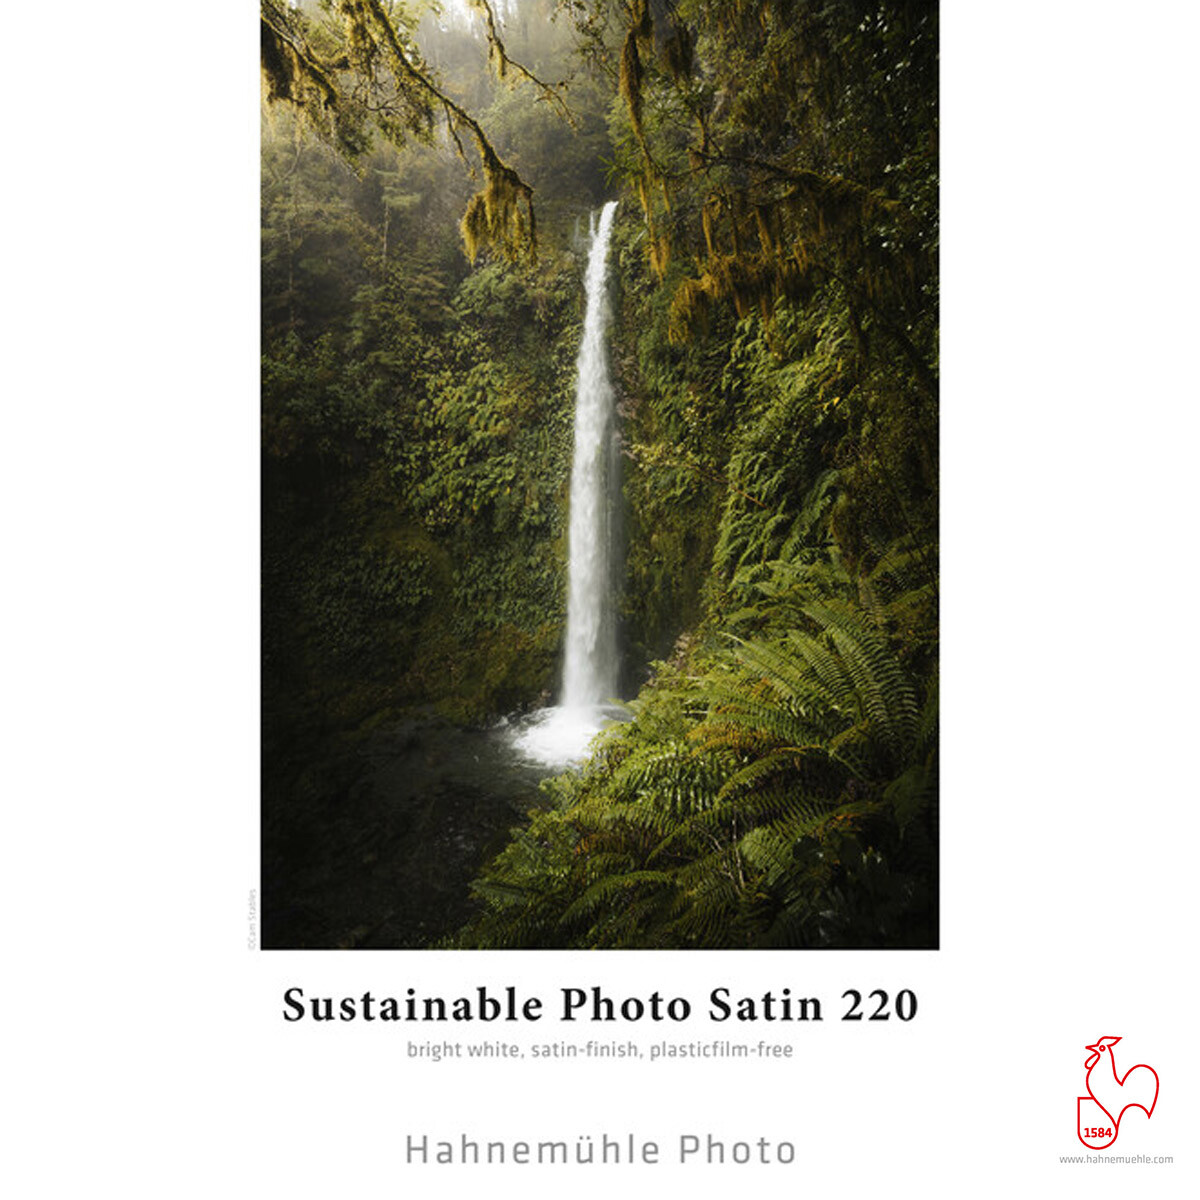 Hahnemühle Sustainable Photo Satin 220 25 sheets DinA4